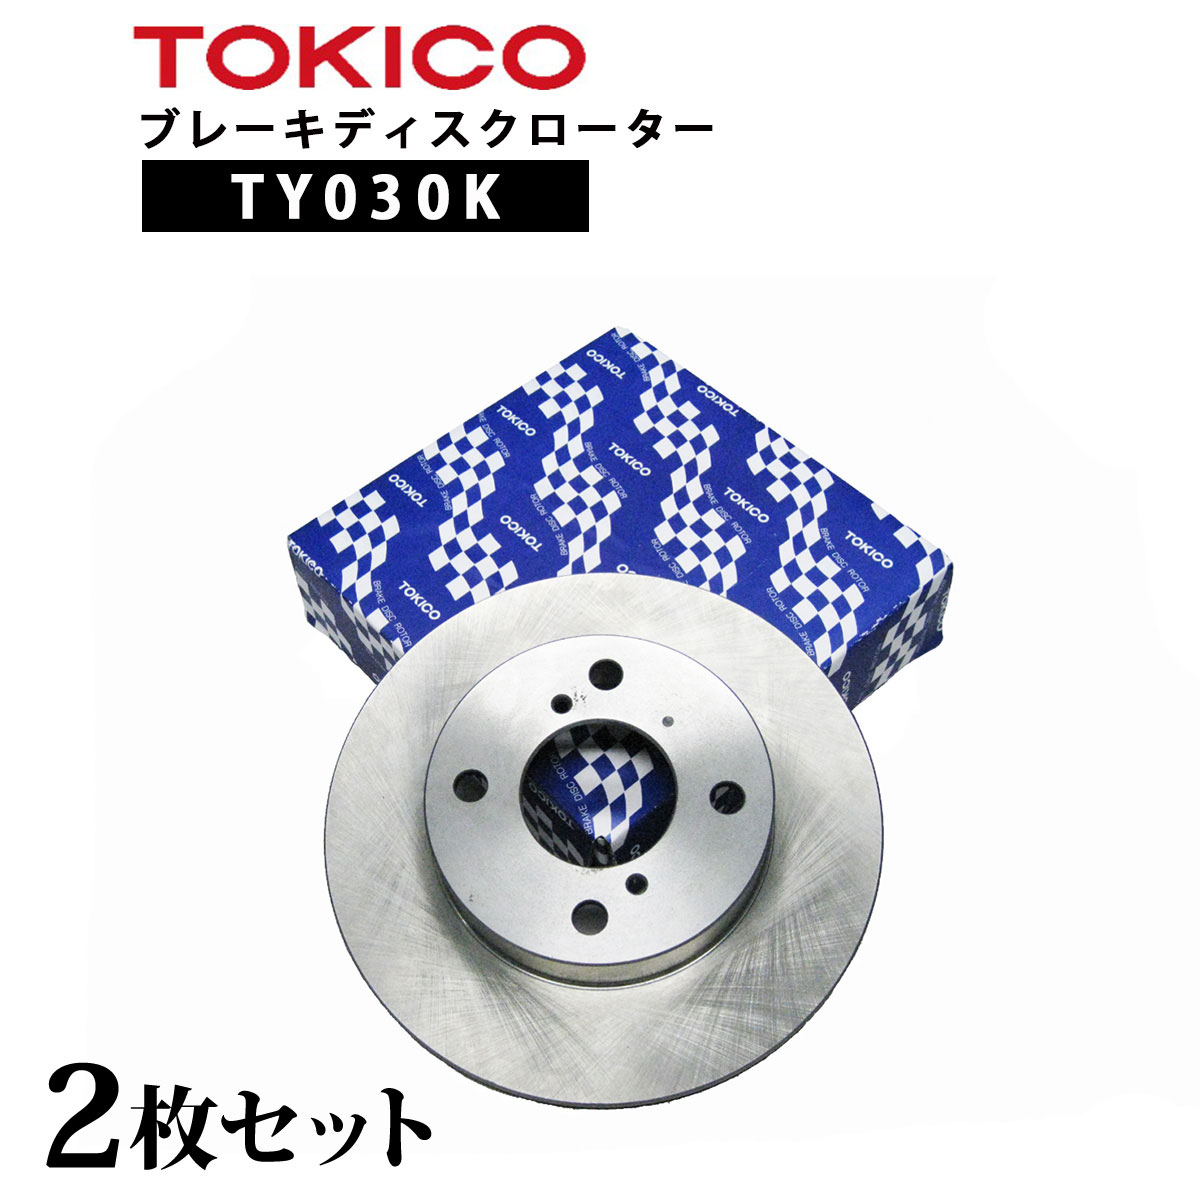 TY030K TOKICO ブレーキディスクローター フロント 2枚 左右セット トキコ 日立 適合 純正 スズキ 55311-69D00 アルト F CN22S,CP22S,CN32S 他社 BD6771 S6-004B H6F336J